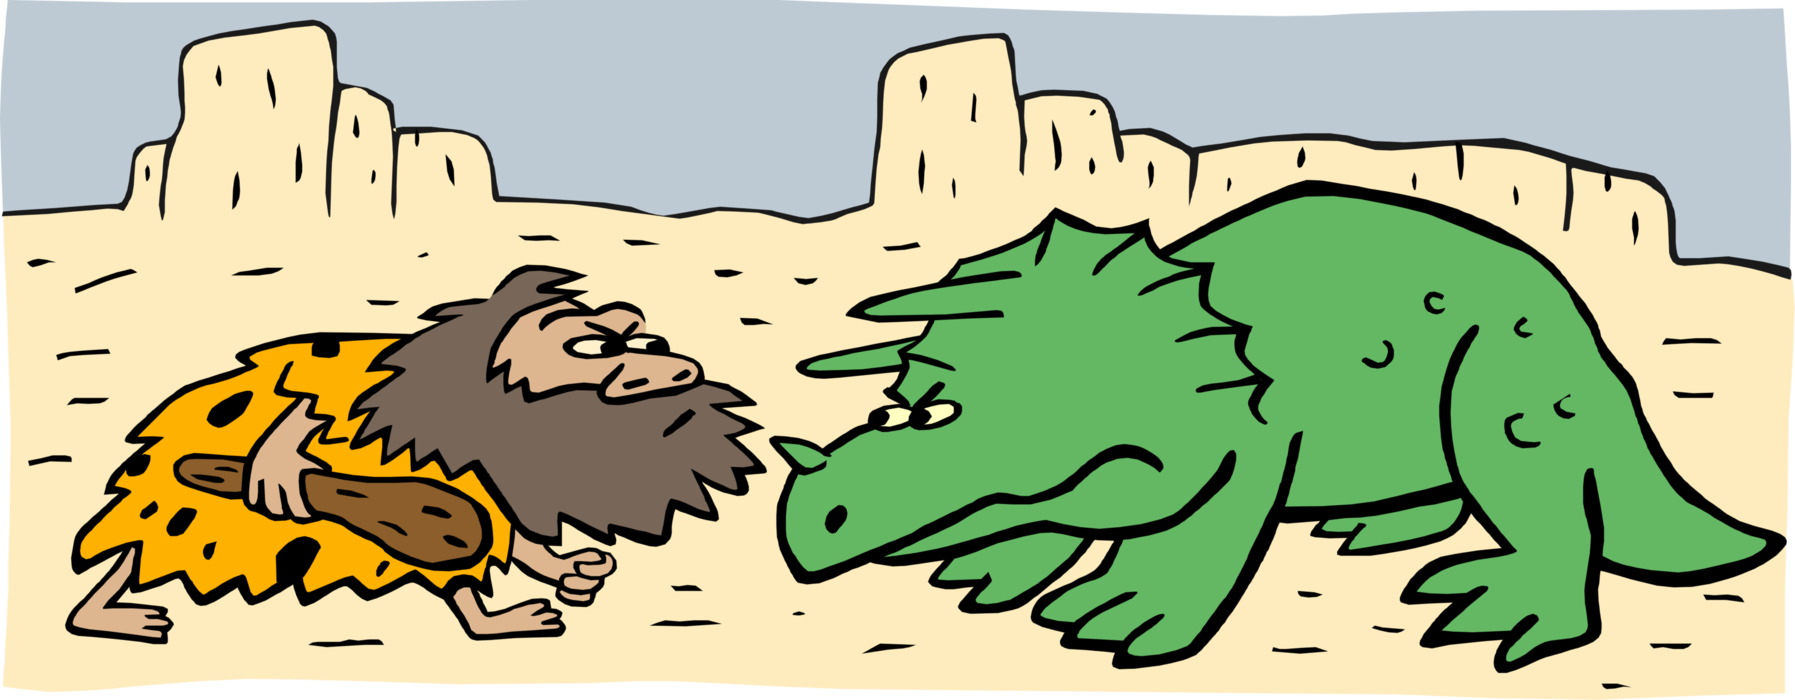 Vector Illustration of Prehistoric Dinosaur and Caveman in Head-to-Head Confrontation